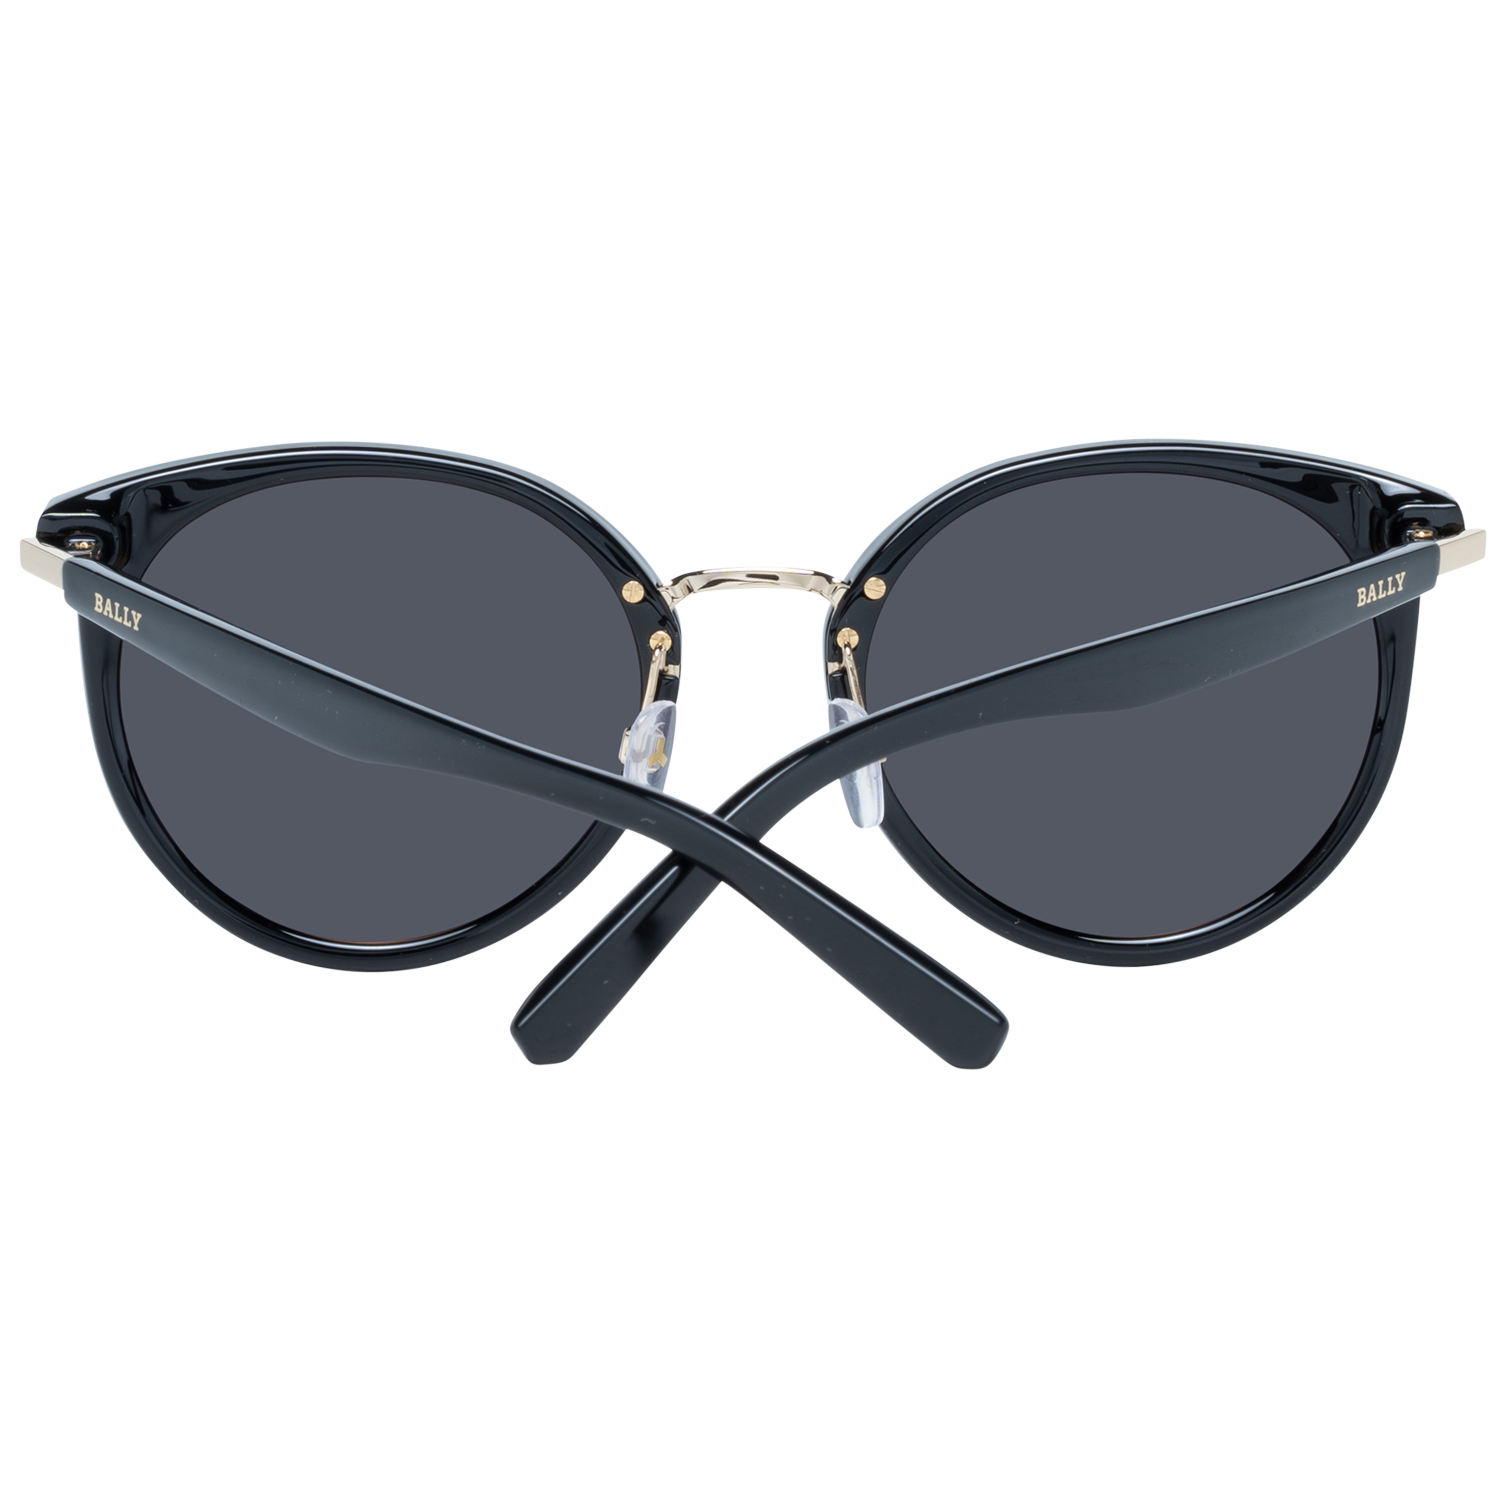 Bally Sunglasses Bally Sunglasses BY0043-K 01A 65 Eyeglasses Eyewear UK USA Australia 